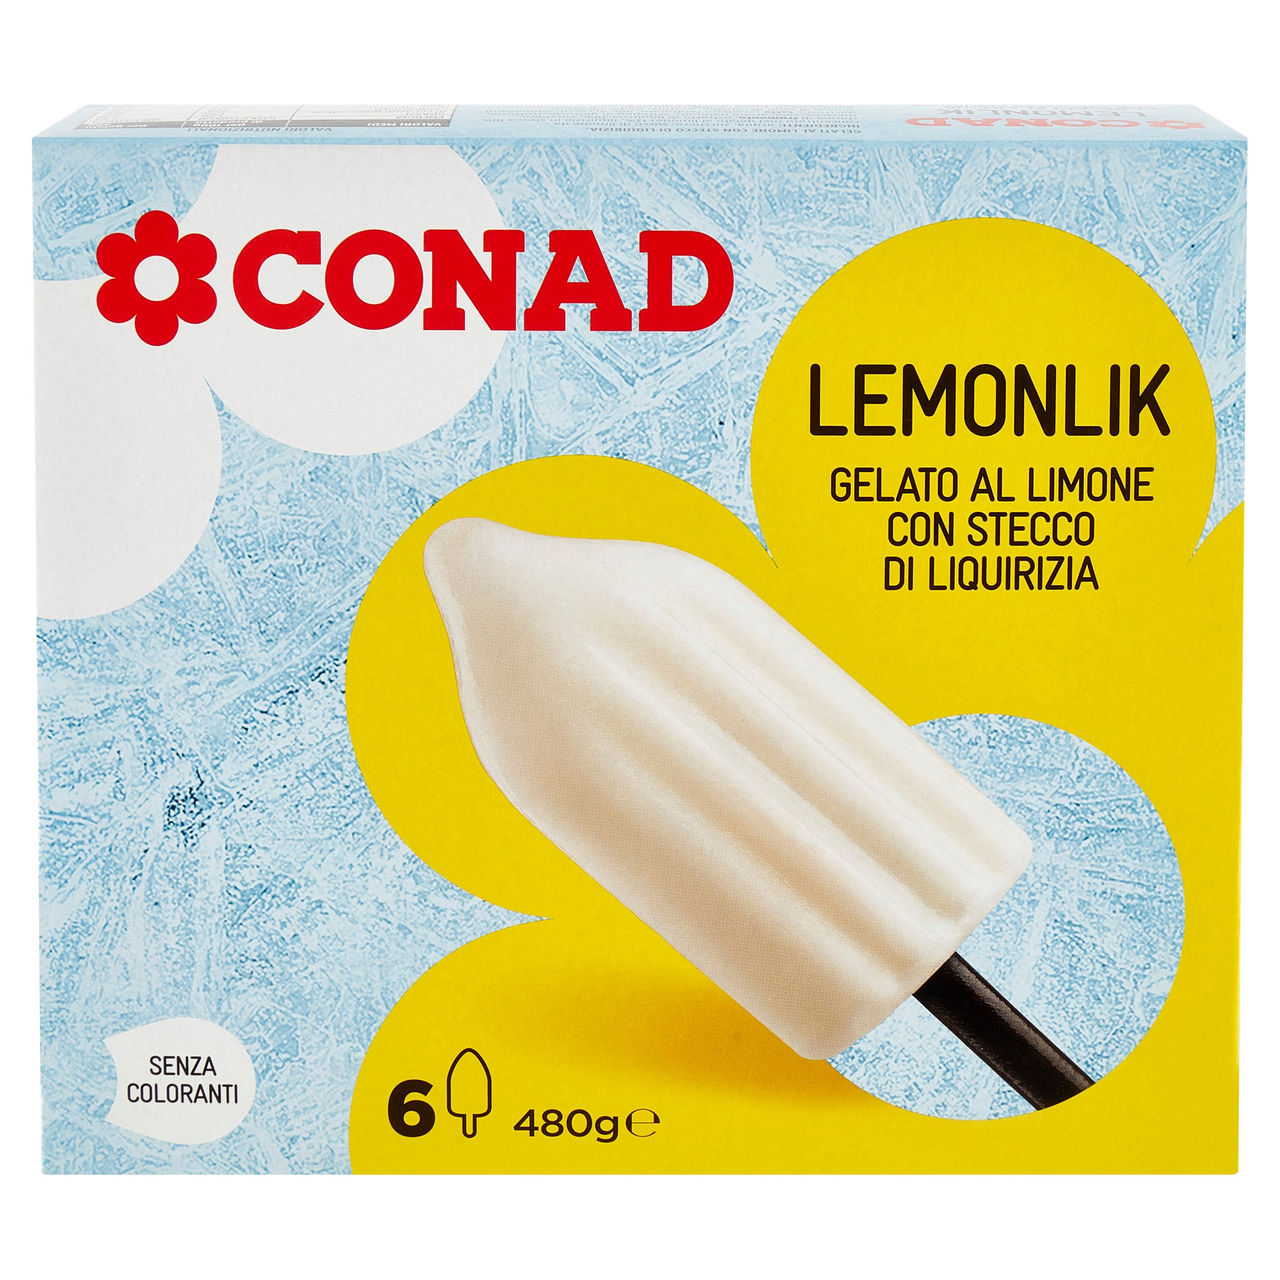 Lemonlik 6 x 80 g Conad in vendita online